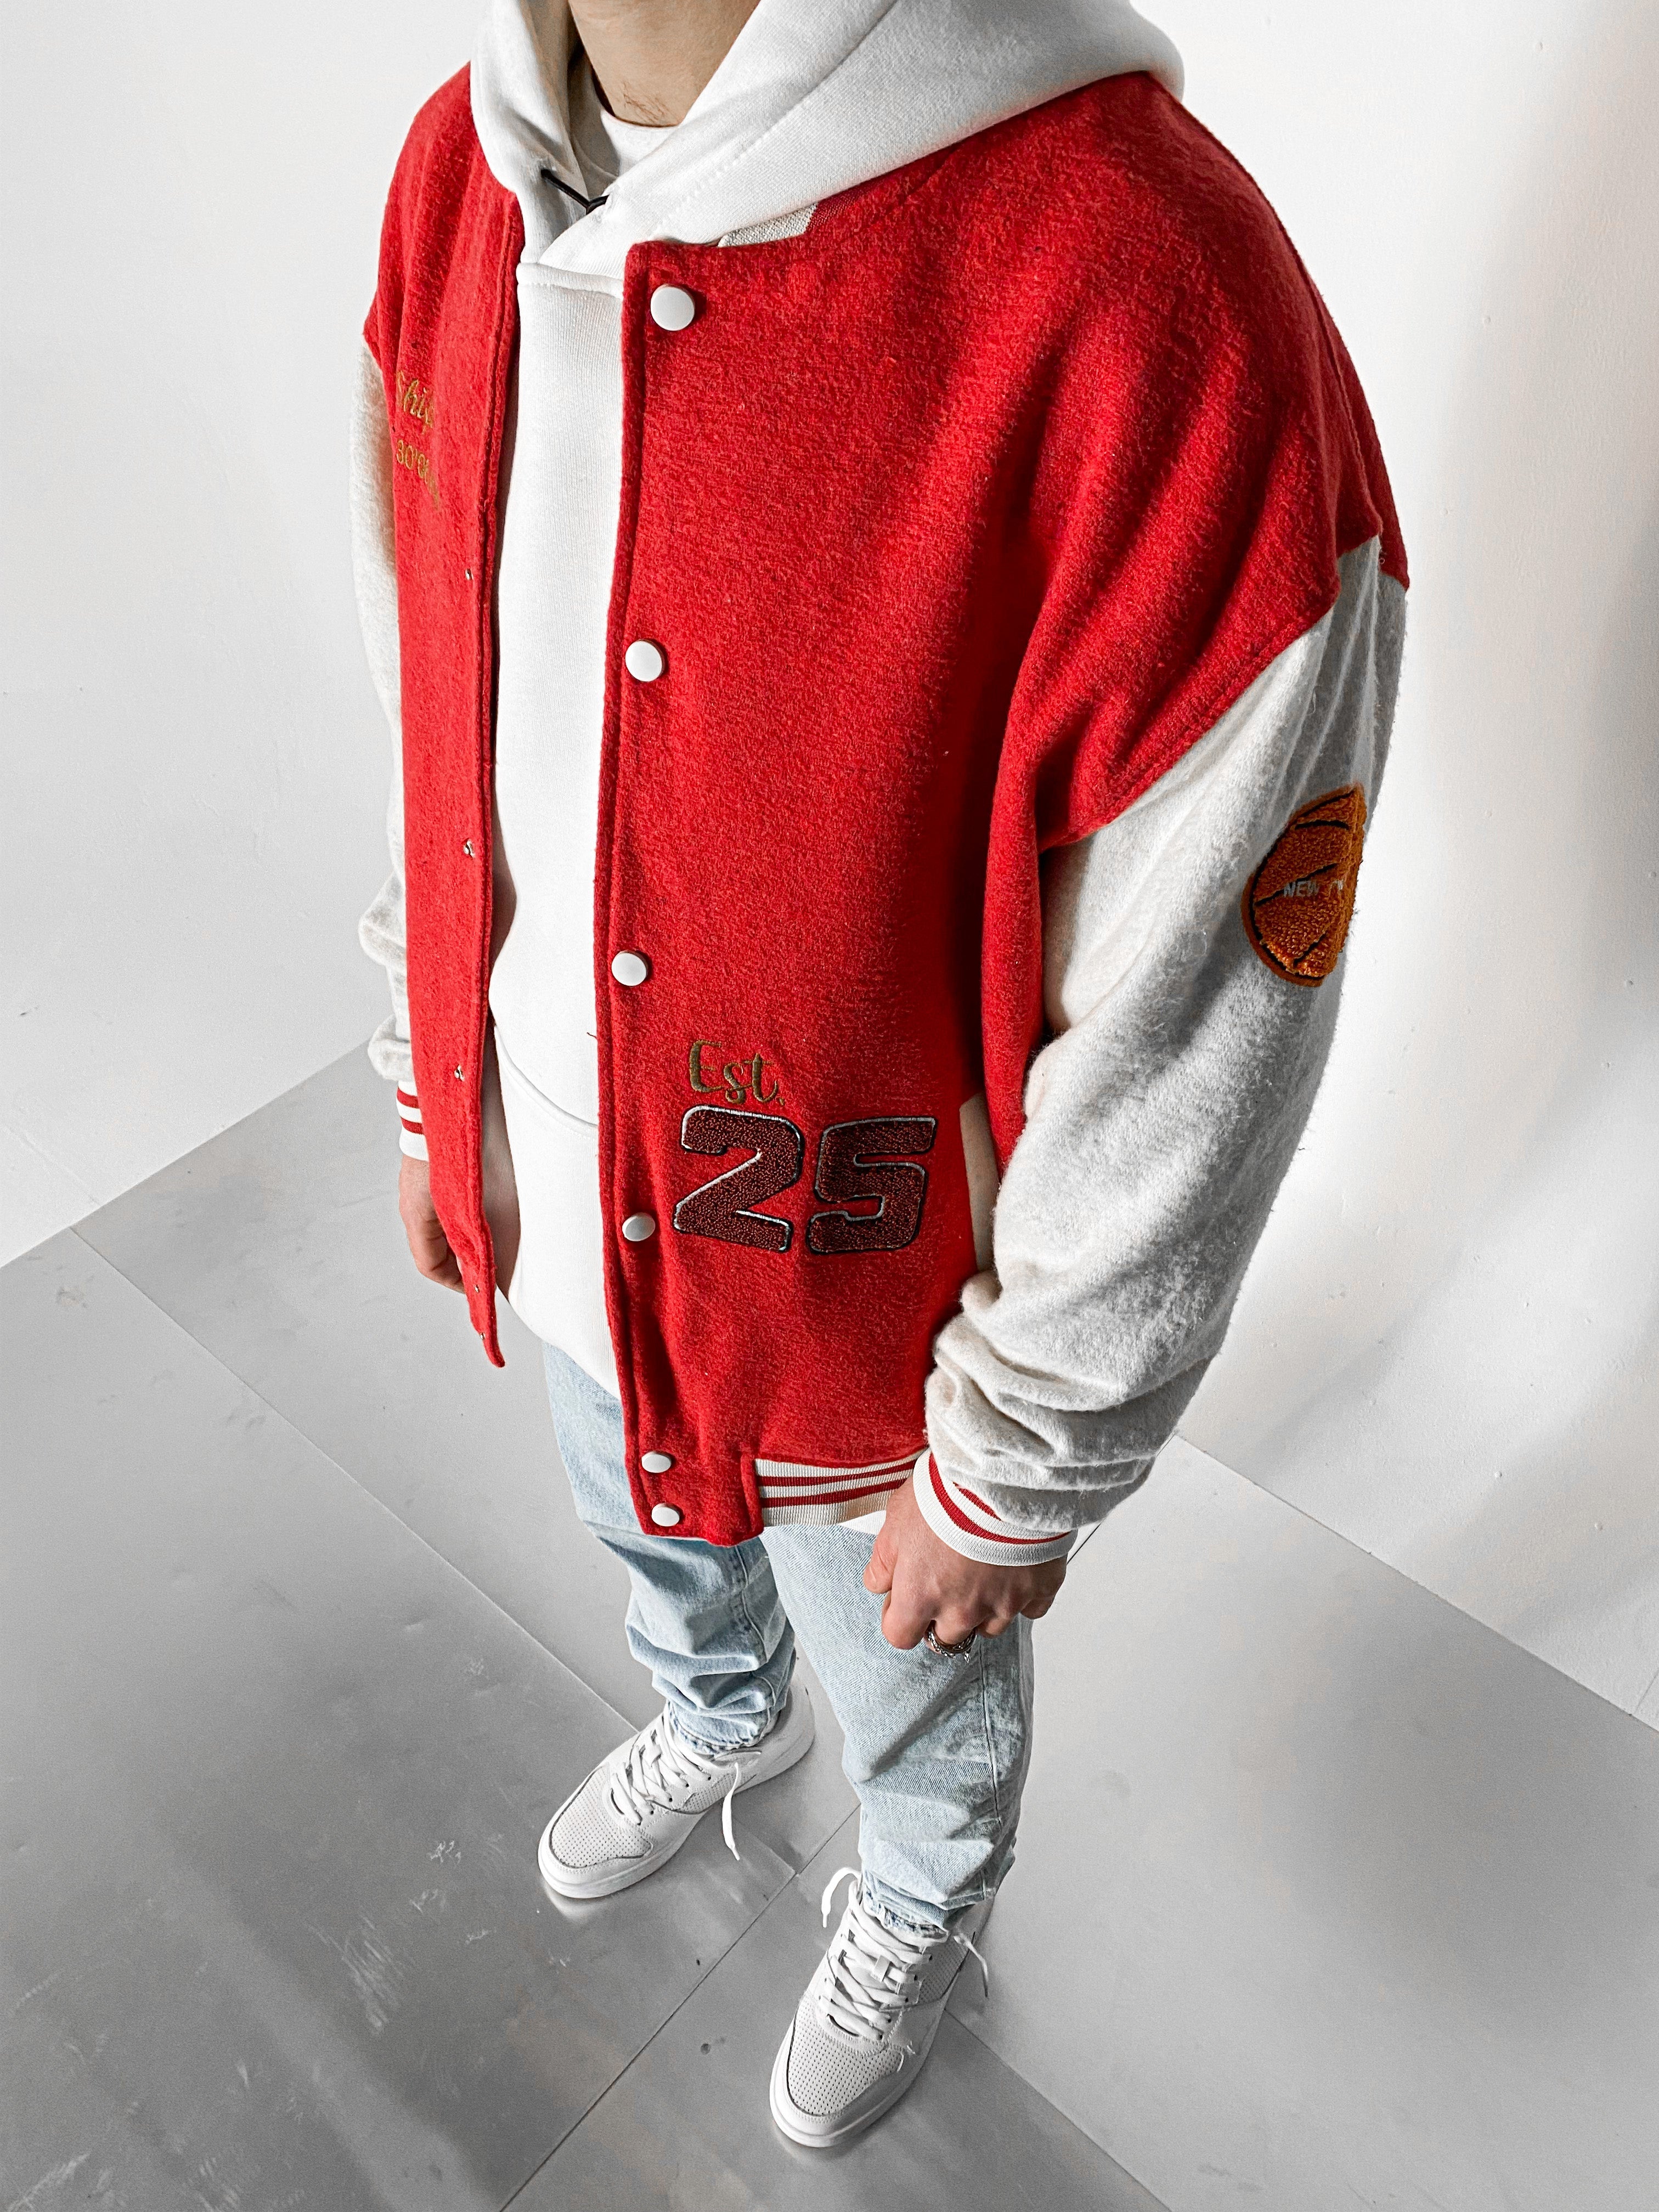 Premium Red College Jacket - UNEFFECTED STUDIOS® - College jacket - OSSY HOMER